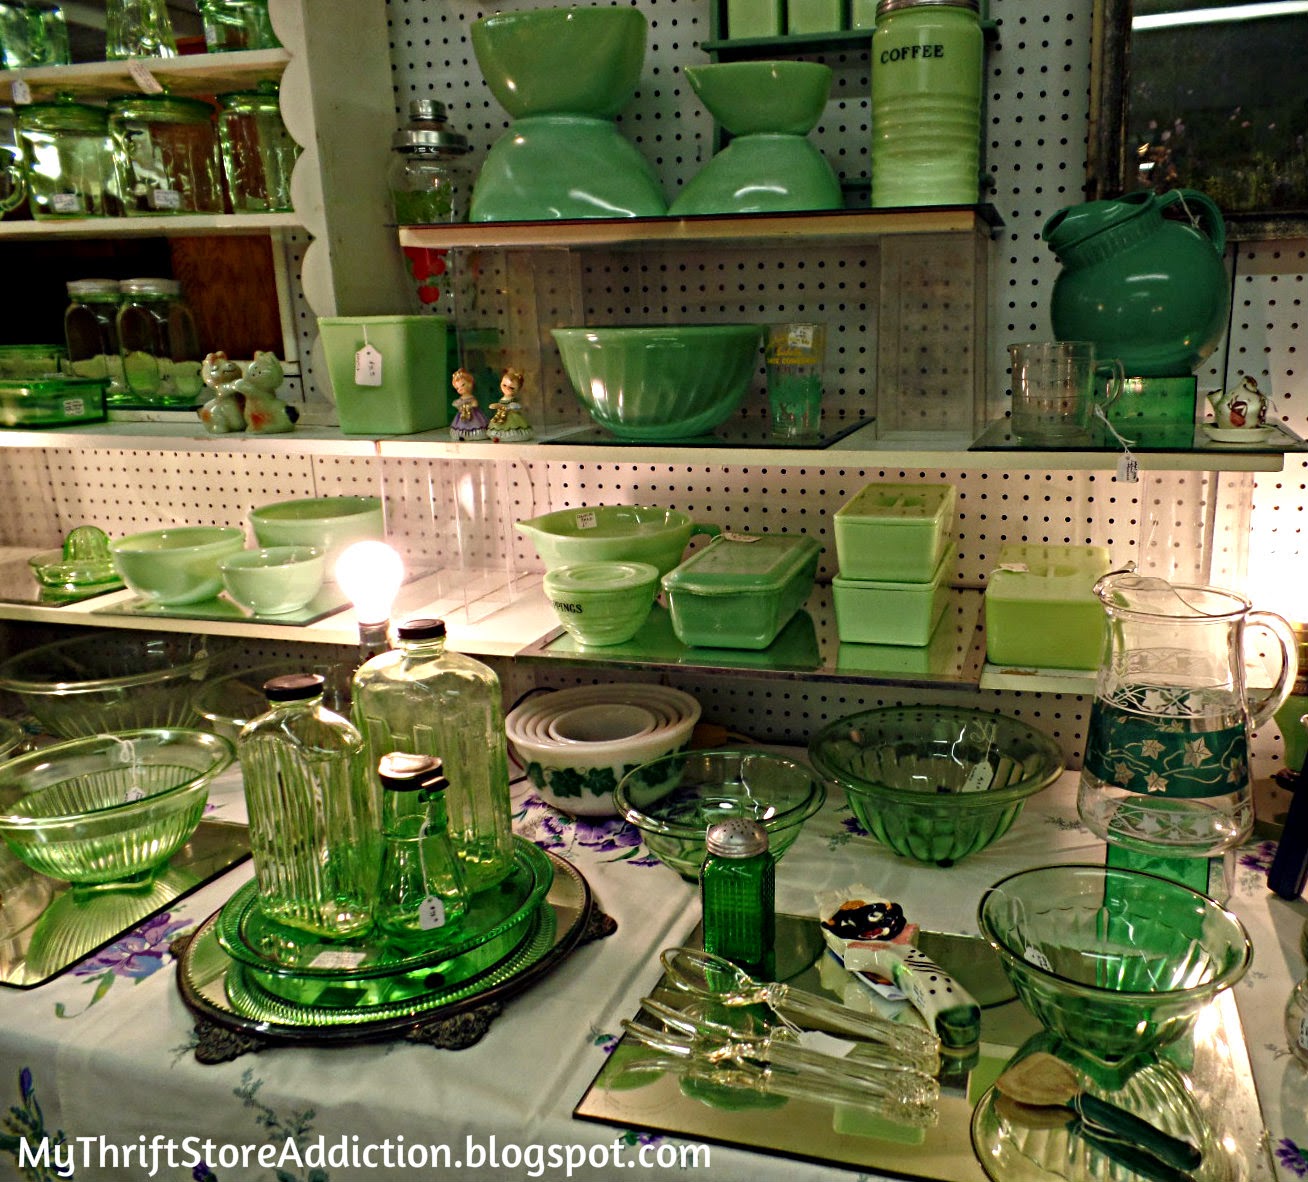 Vintage green glassware